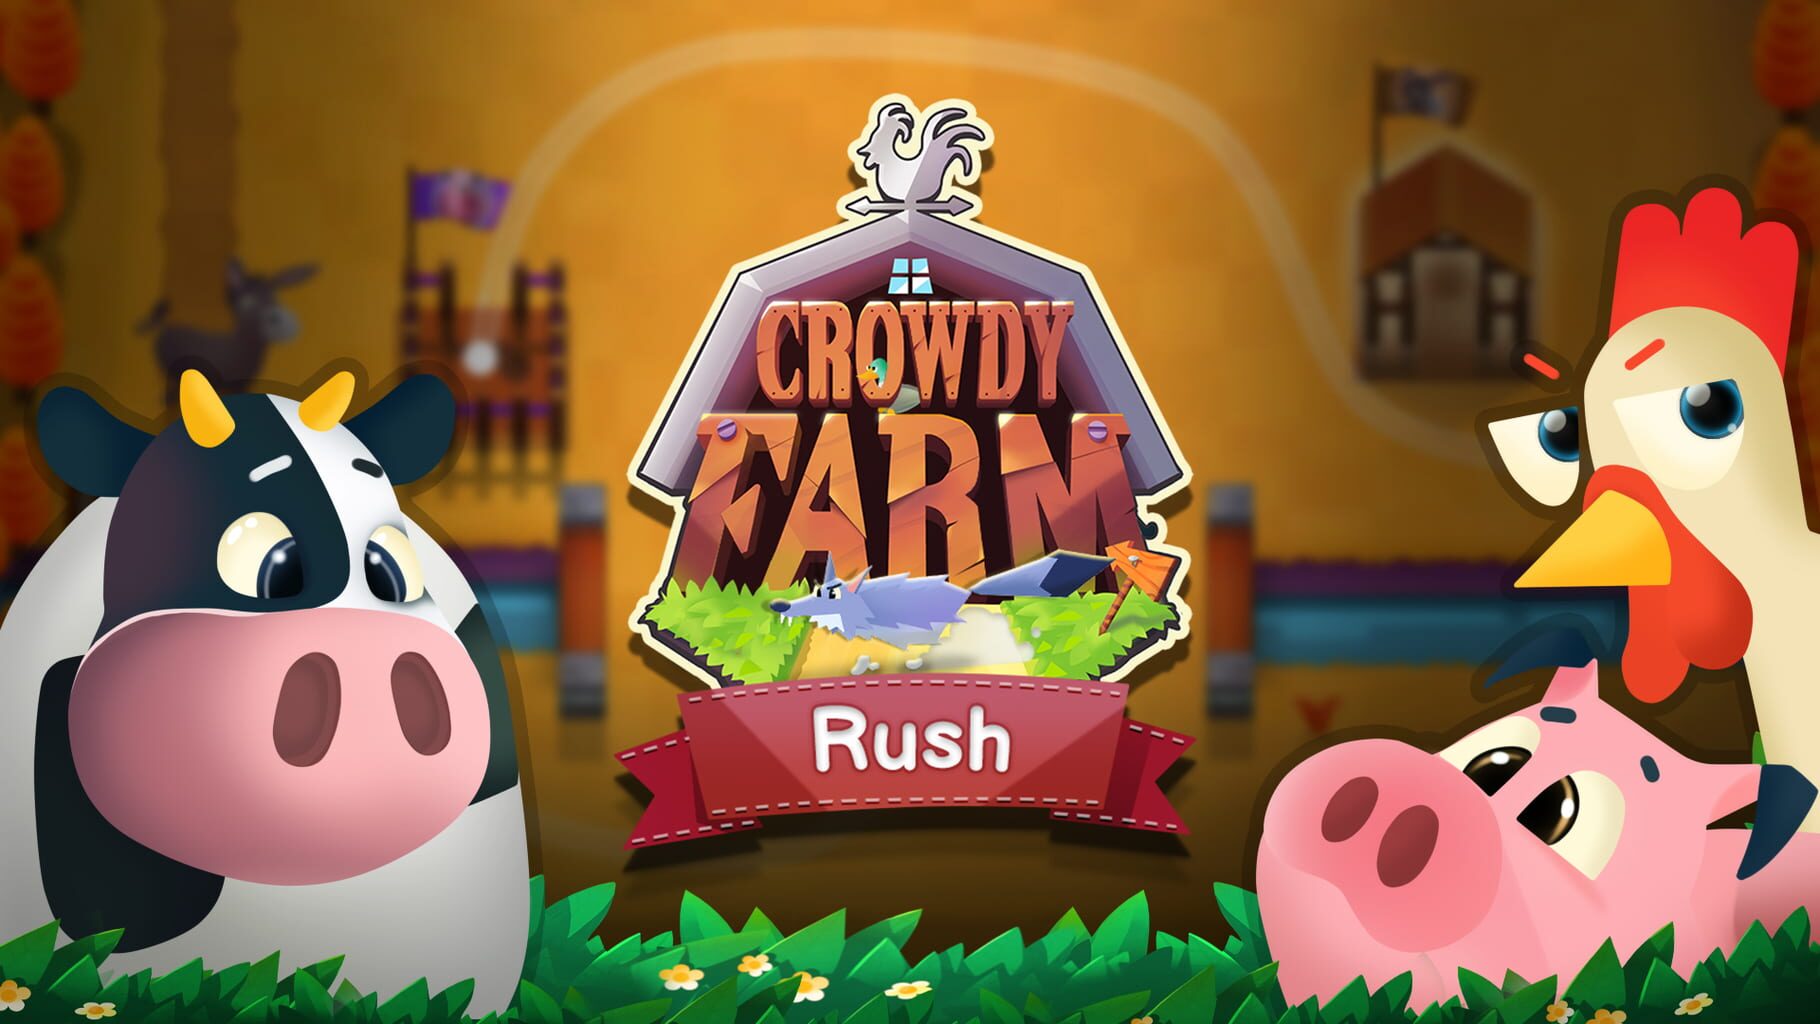 Crowdy Farm Rush artwork